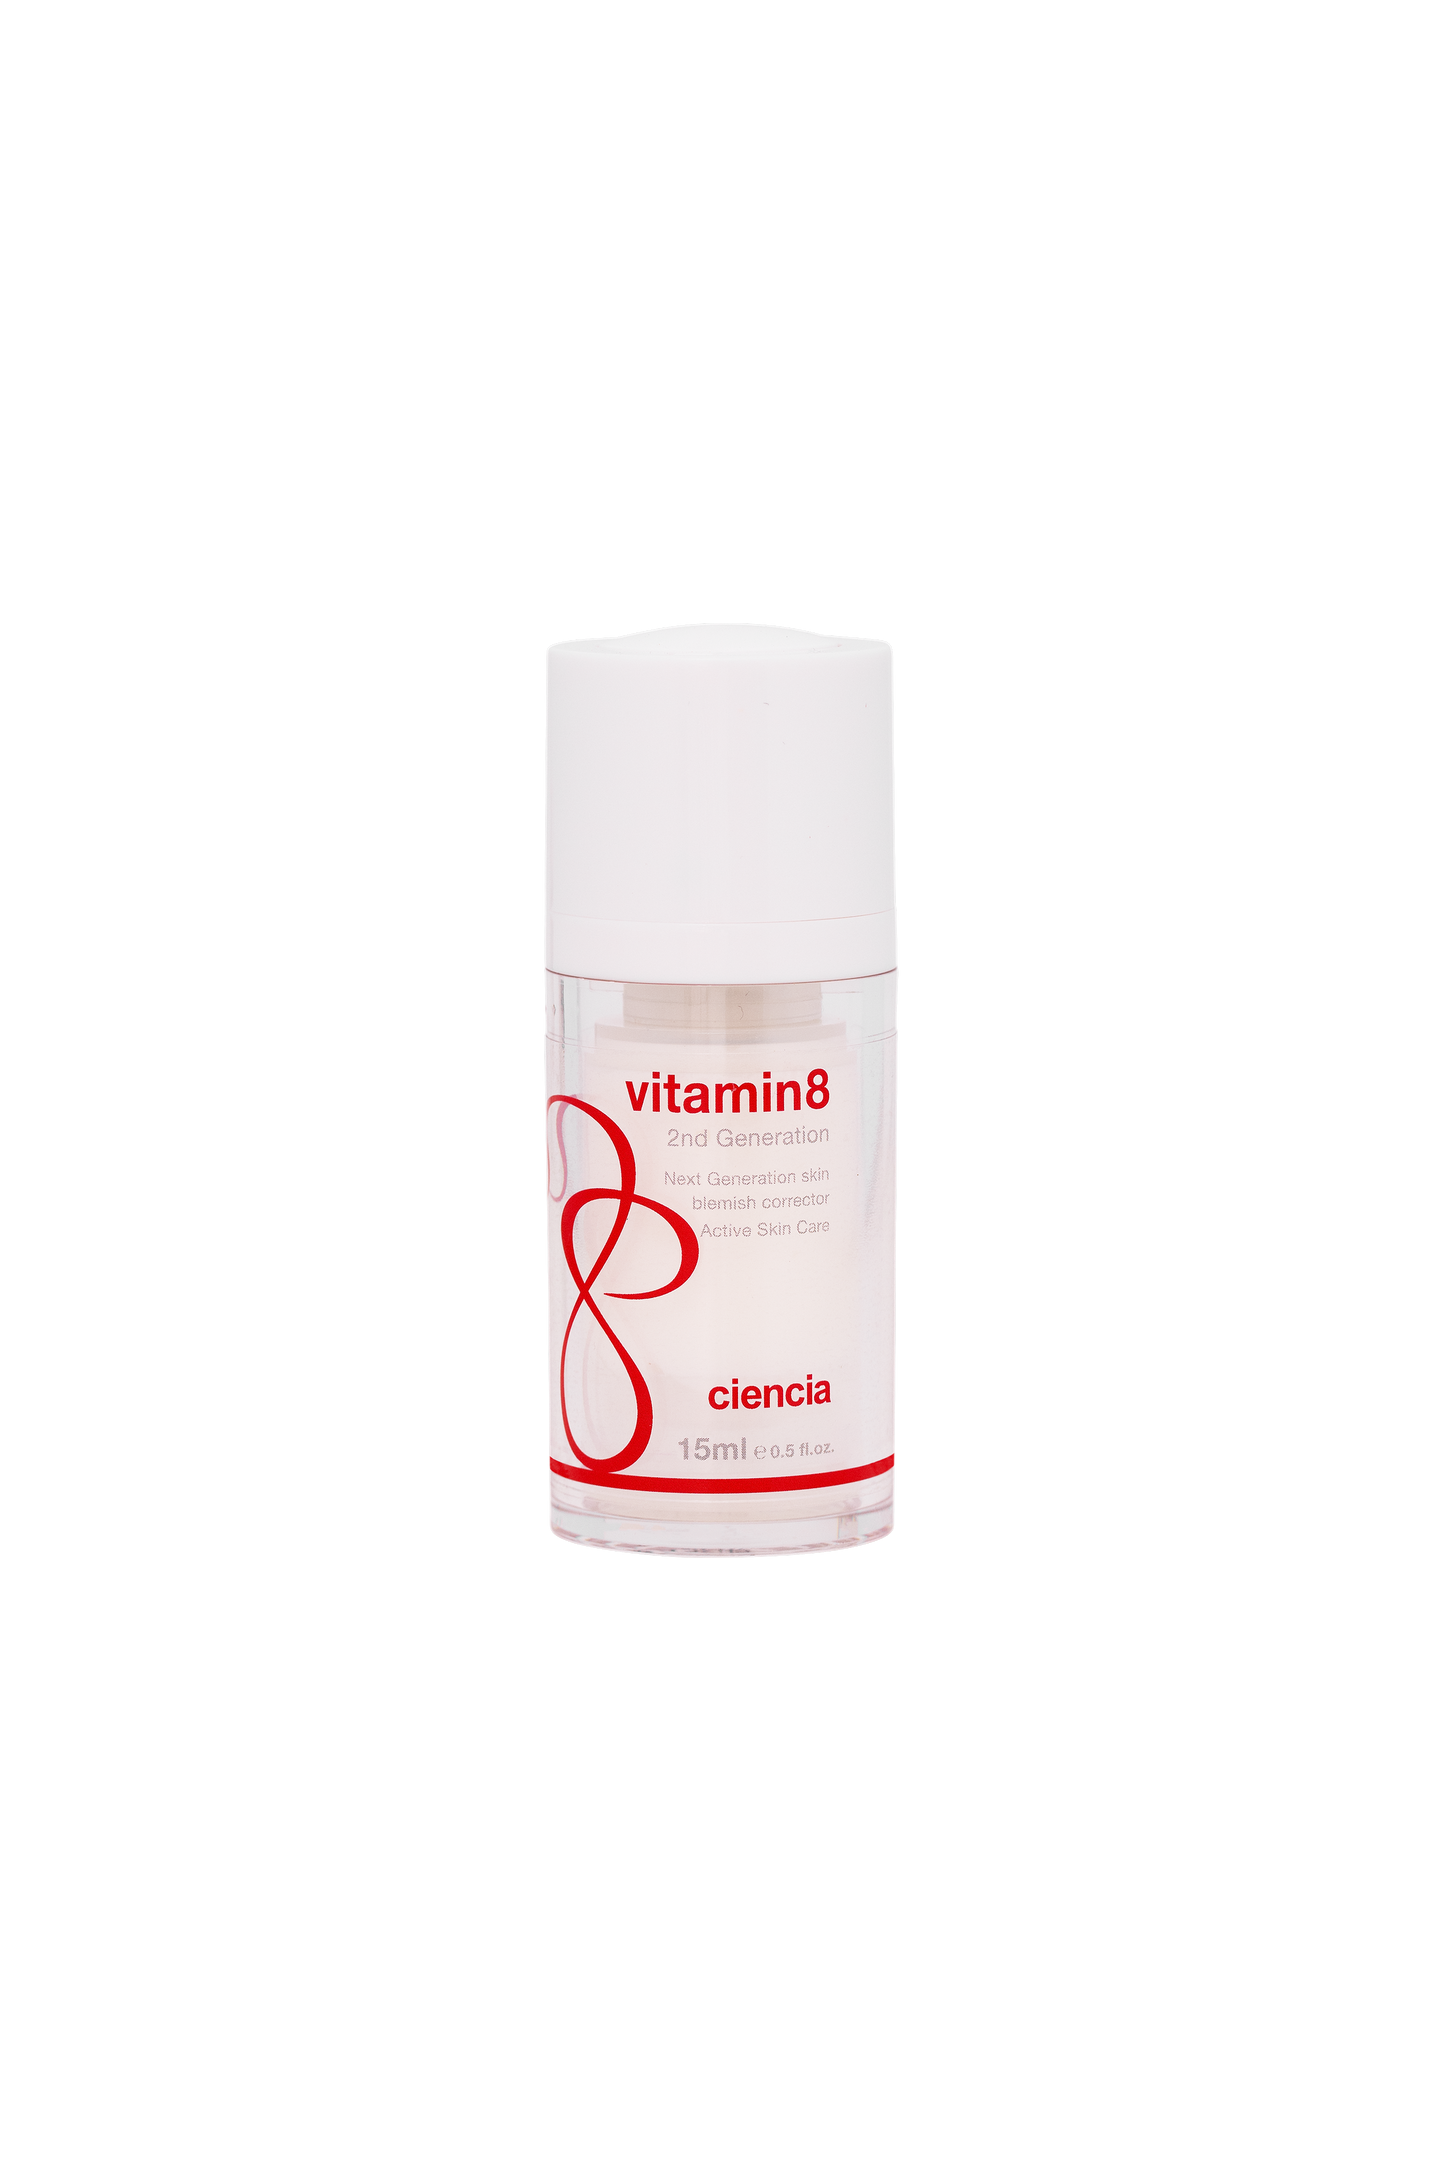 Vitamin8 2nd Generation 15ml - Ciencia Skincare